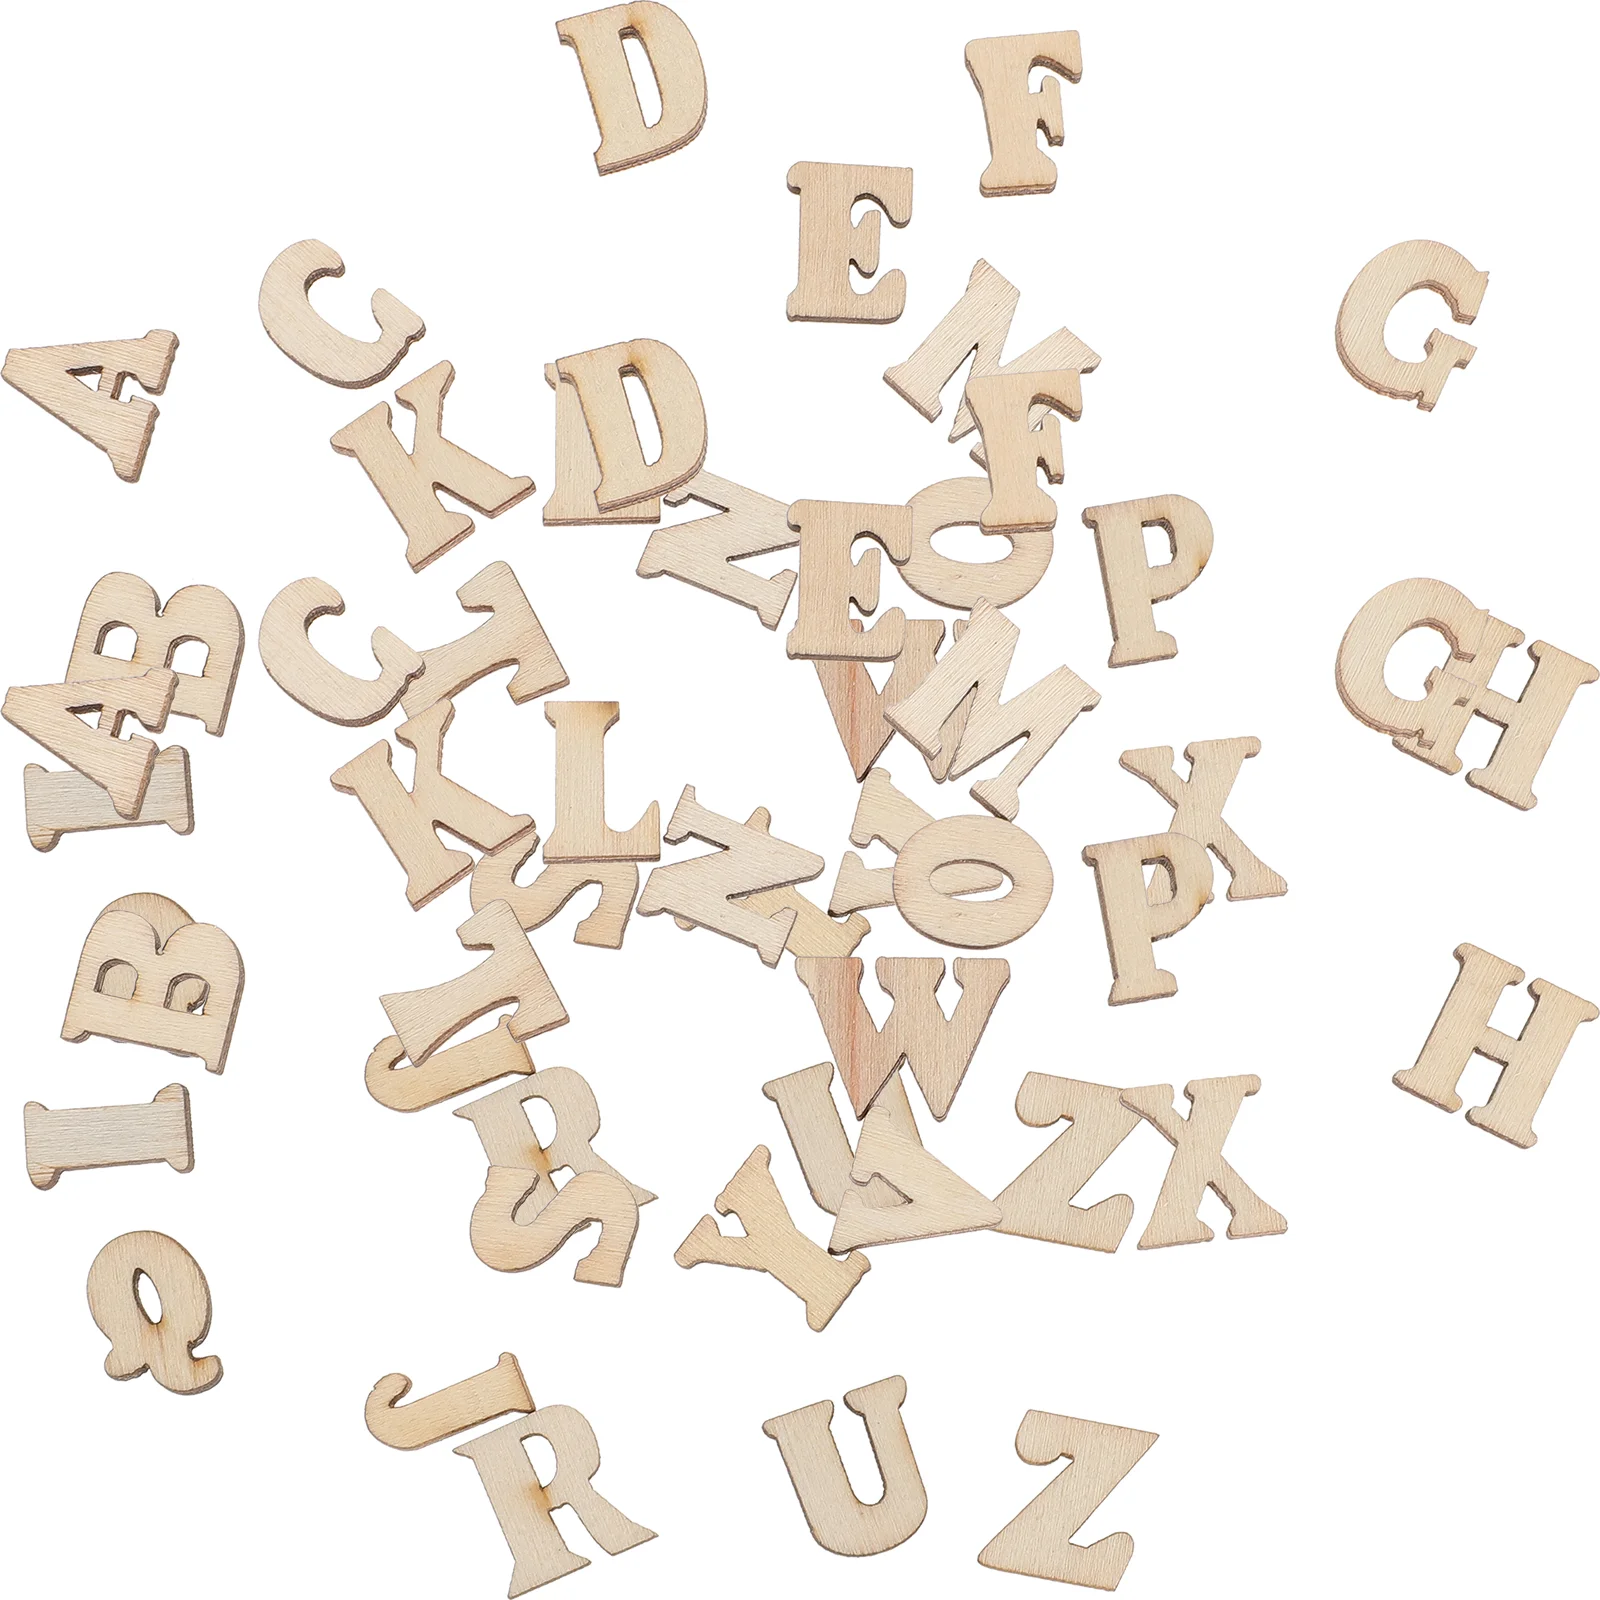 

200 шт., деревянные буквы алфавита, 15 мм